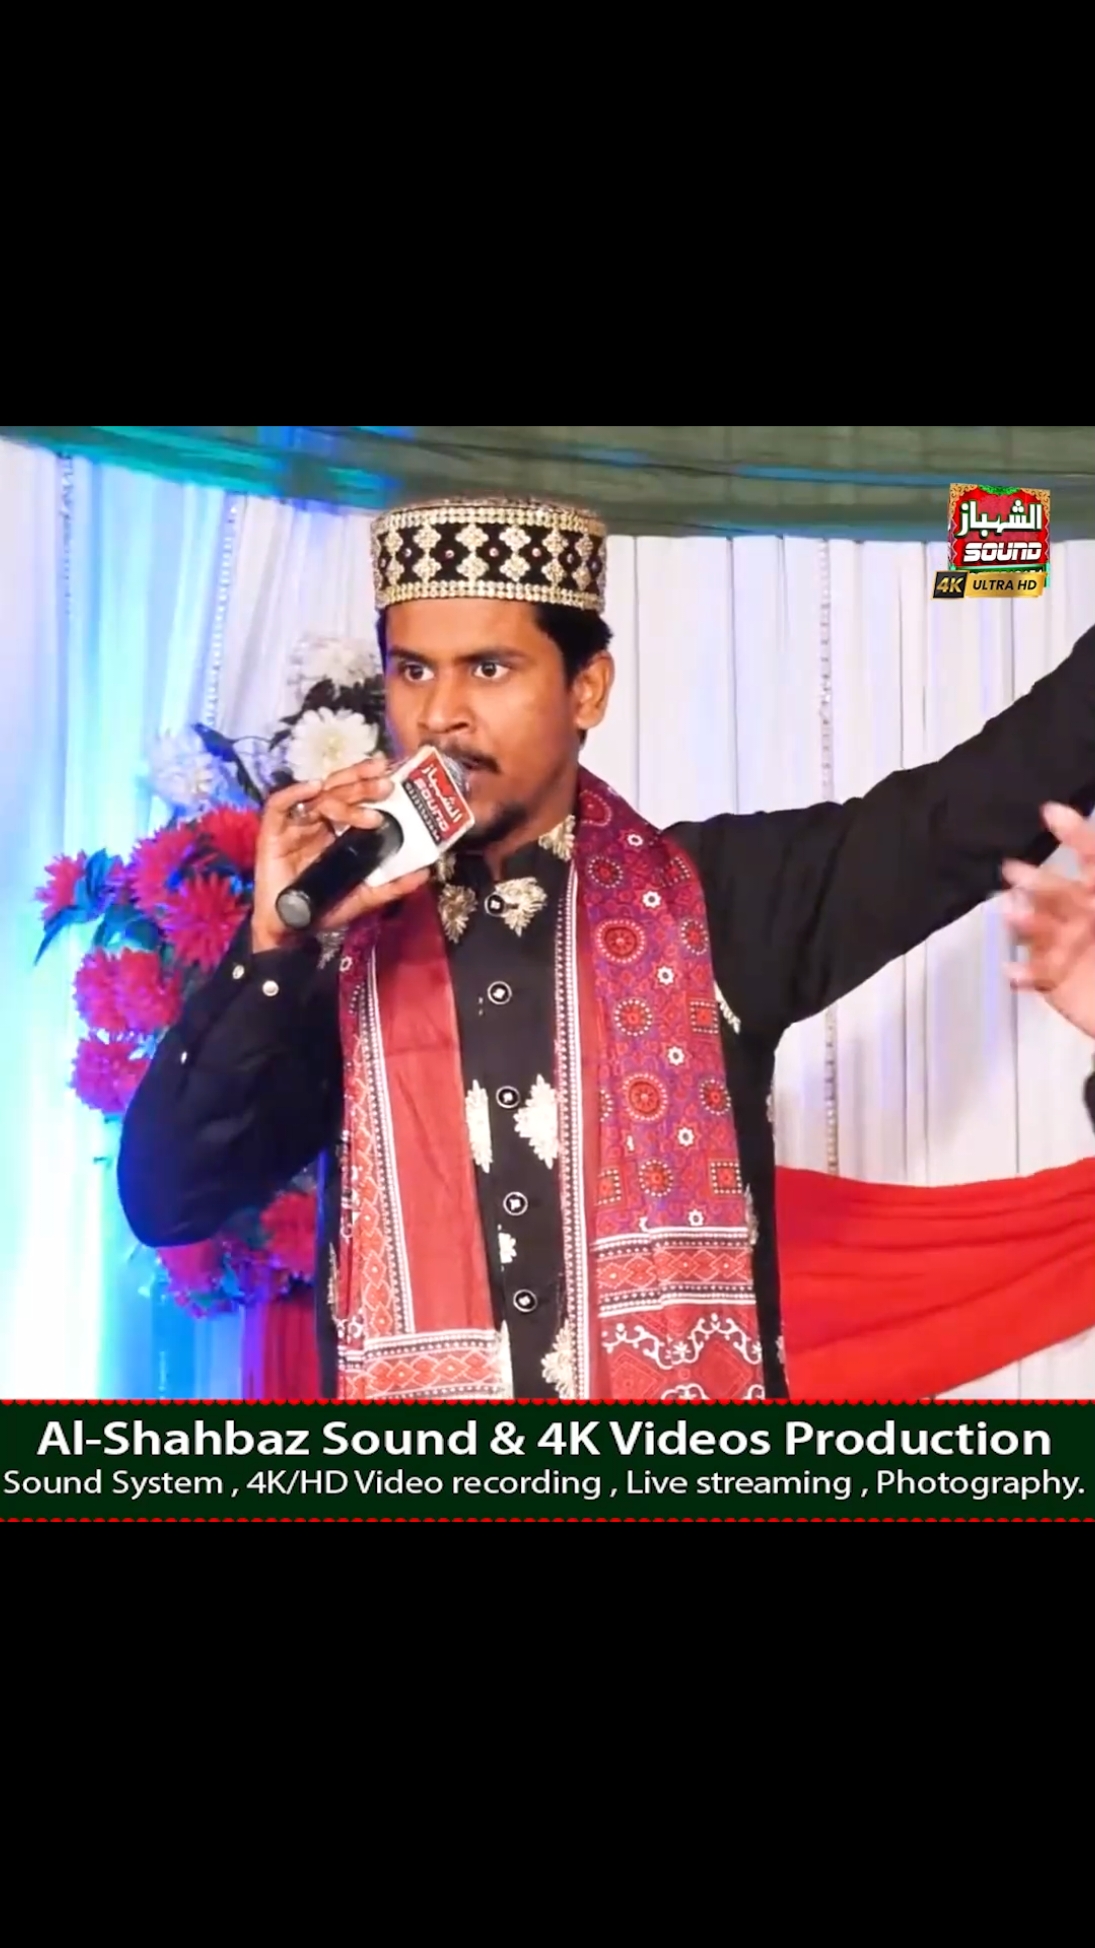 Azam Qadri #foryou #alshahbazsound #viralvideo #viral #fyp #karbala #azamqadri 